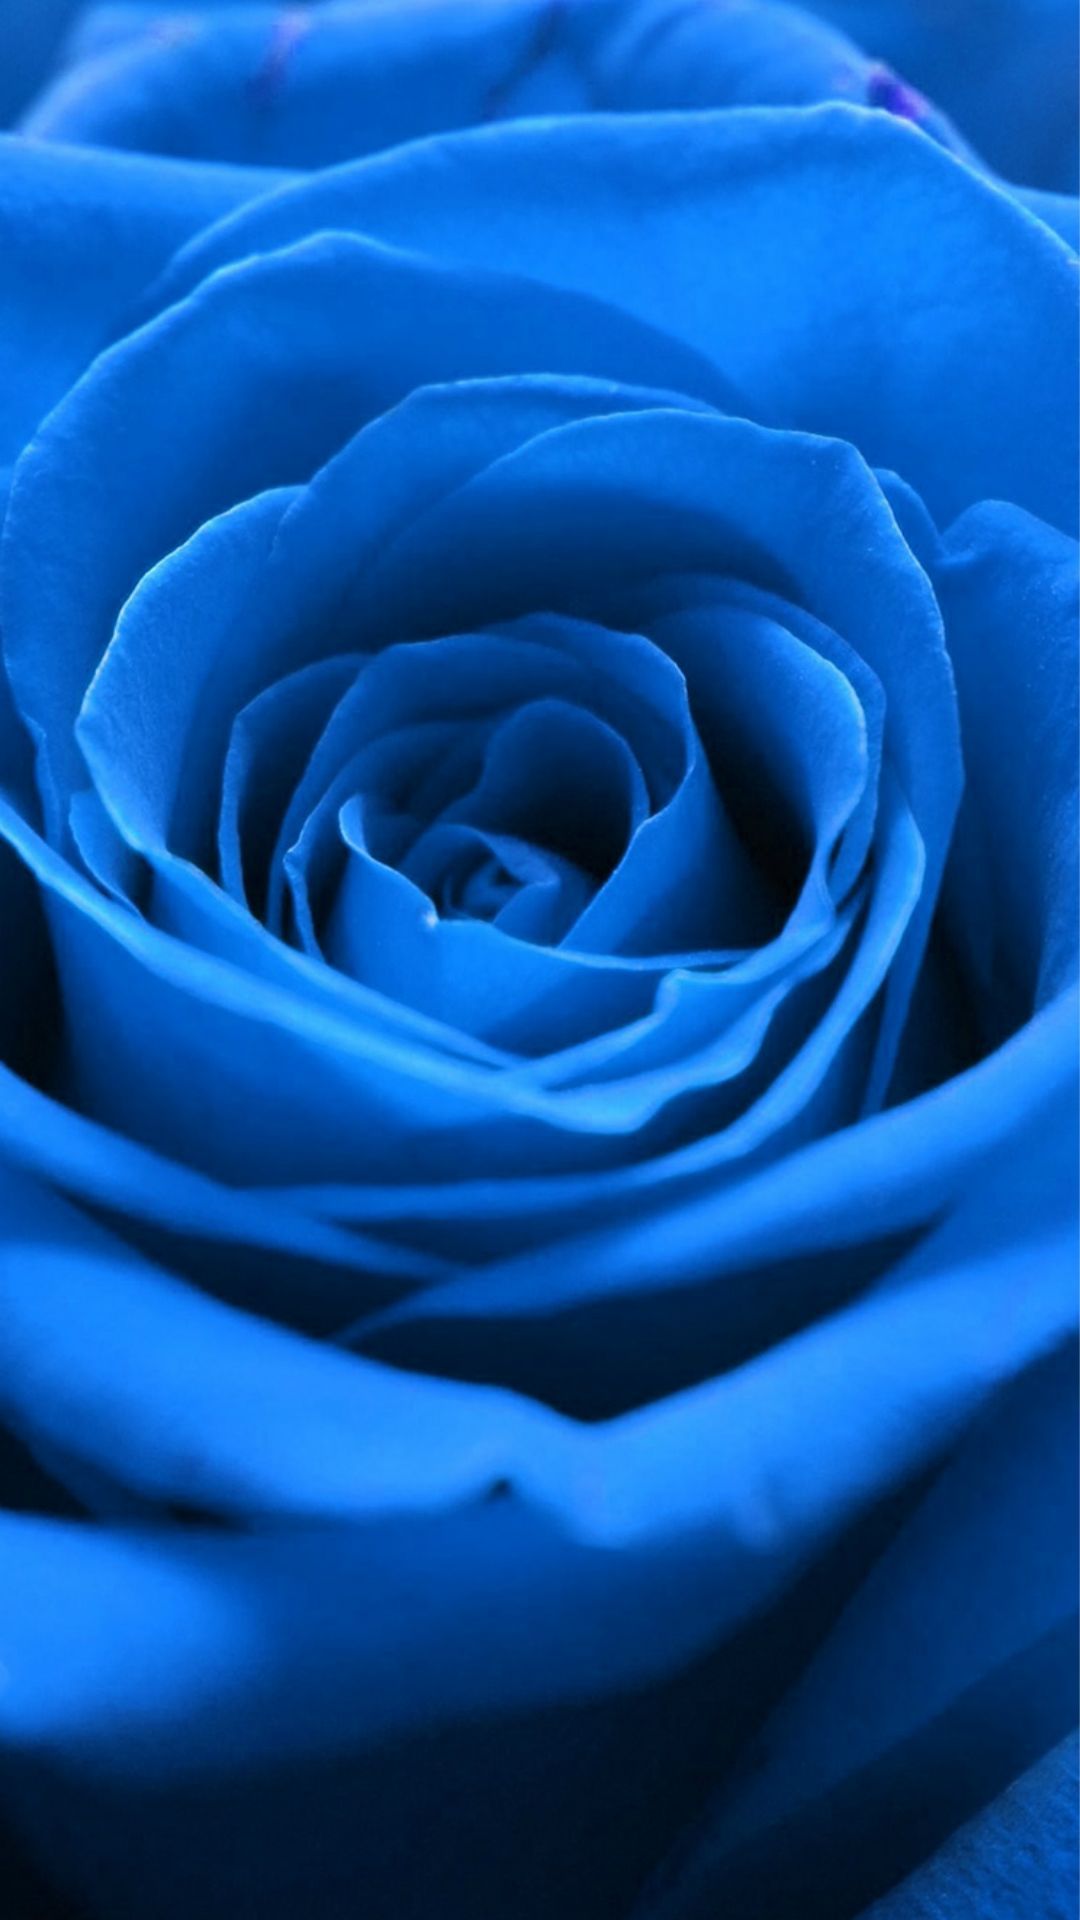 Nature Blue Rose Flower Macro iPhone 6 Wallpaper Download iPhone